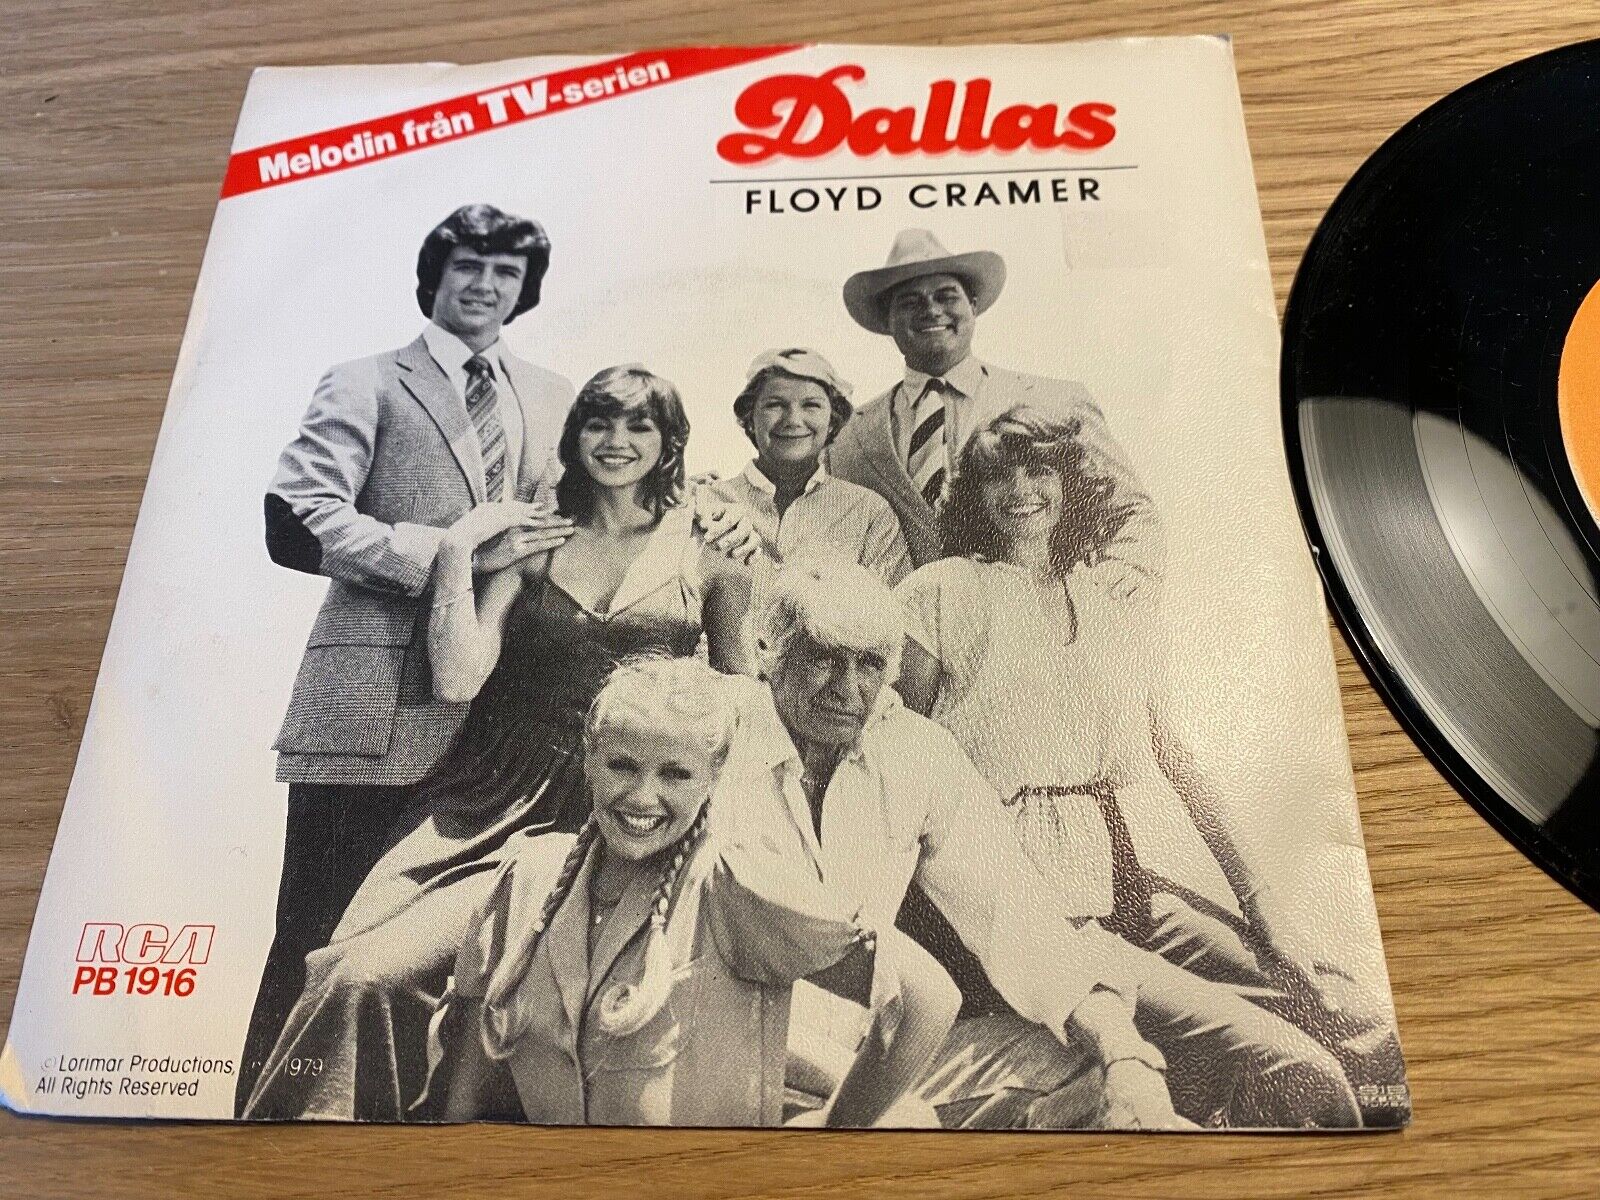 FLOYD CRAMER "DALLAS & M.A.S.H." TV THEMES 1981 7 INCH SINGLE RCA VICTOR RECORDS